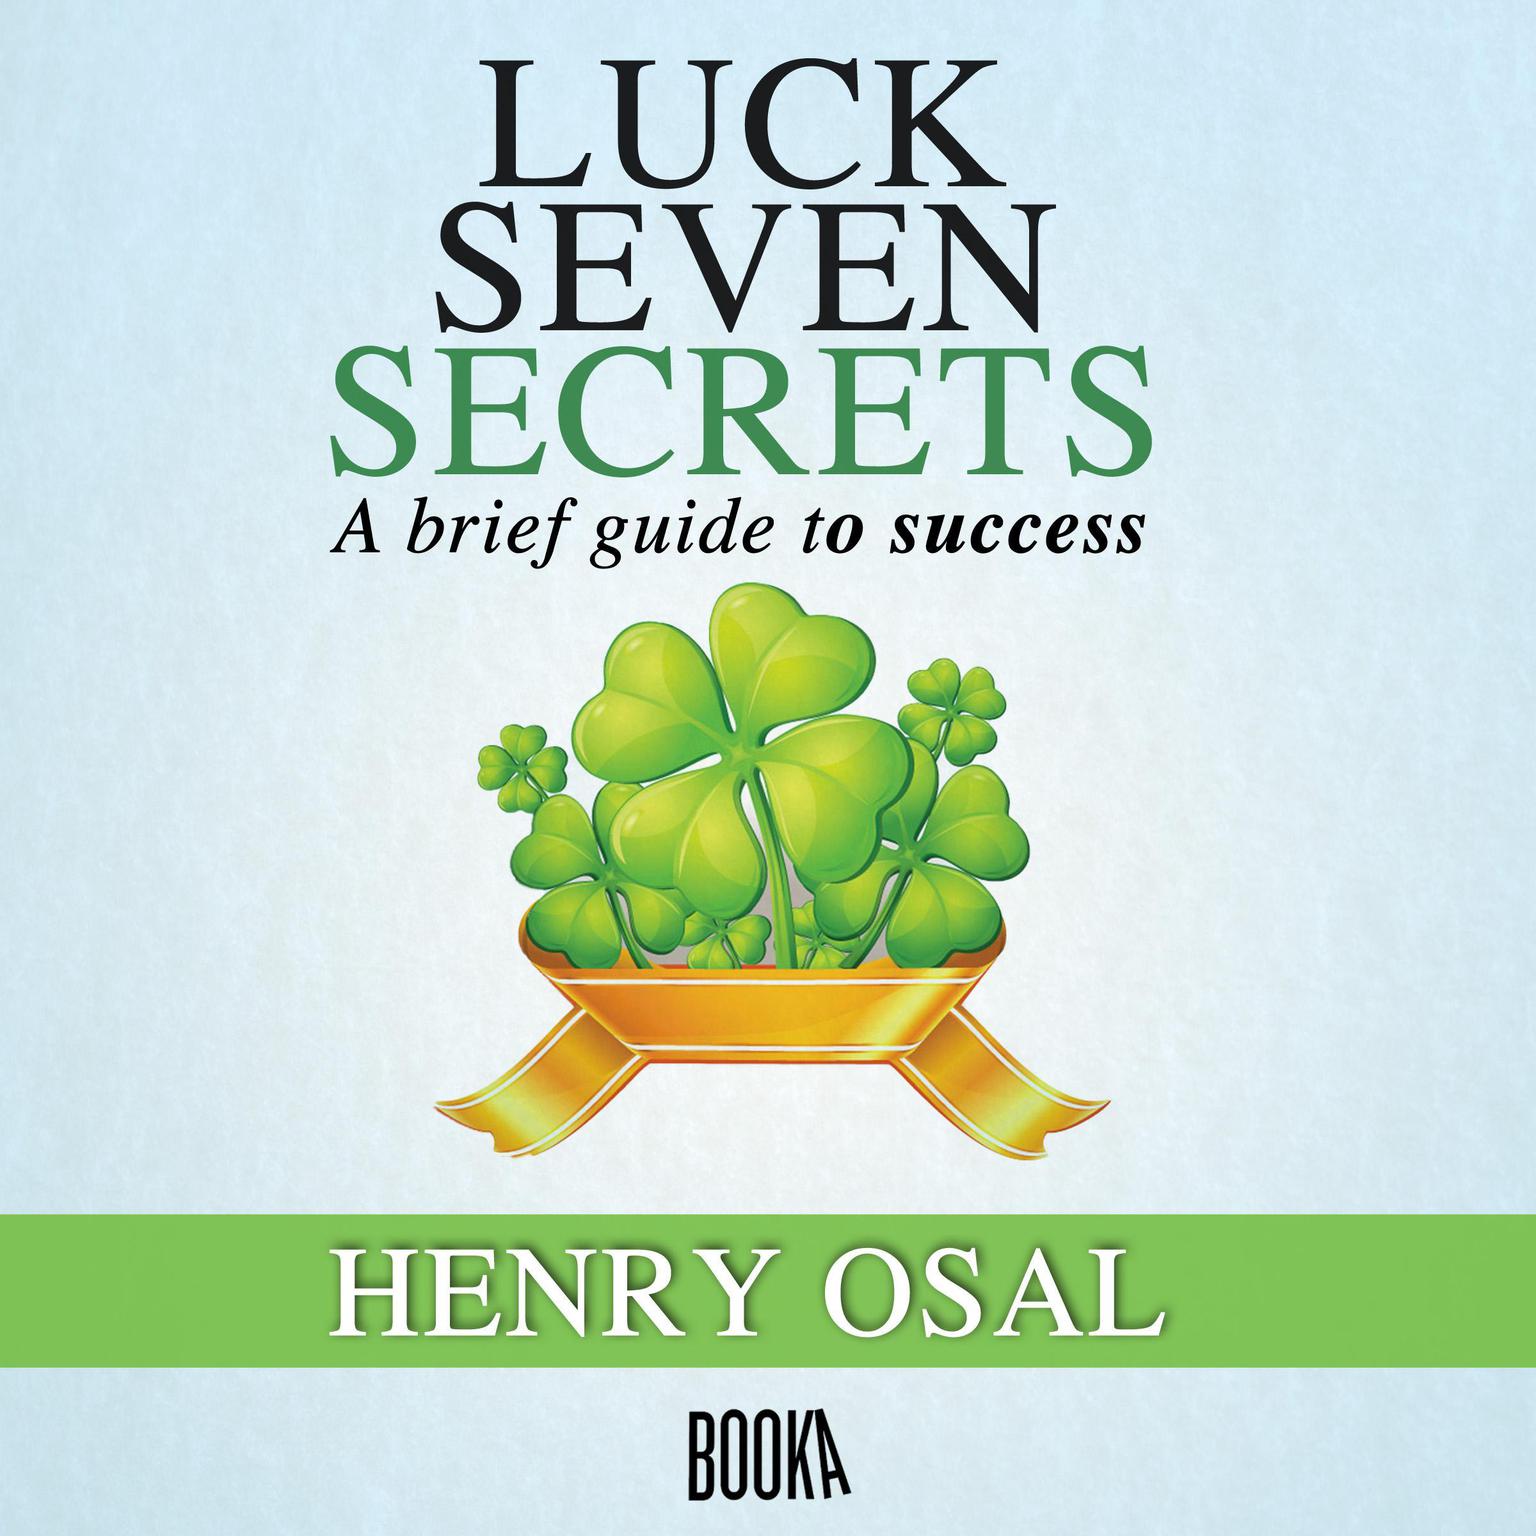 Suerte Siete secretos (Luck Seven Secrets) Audiobook, by Henry Osal